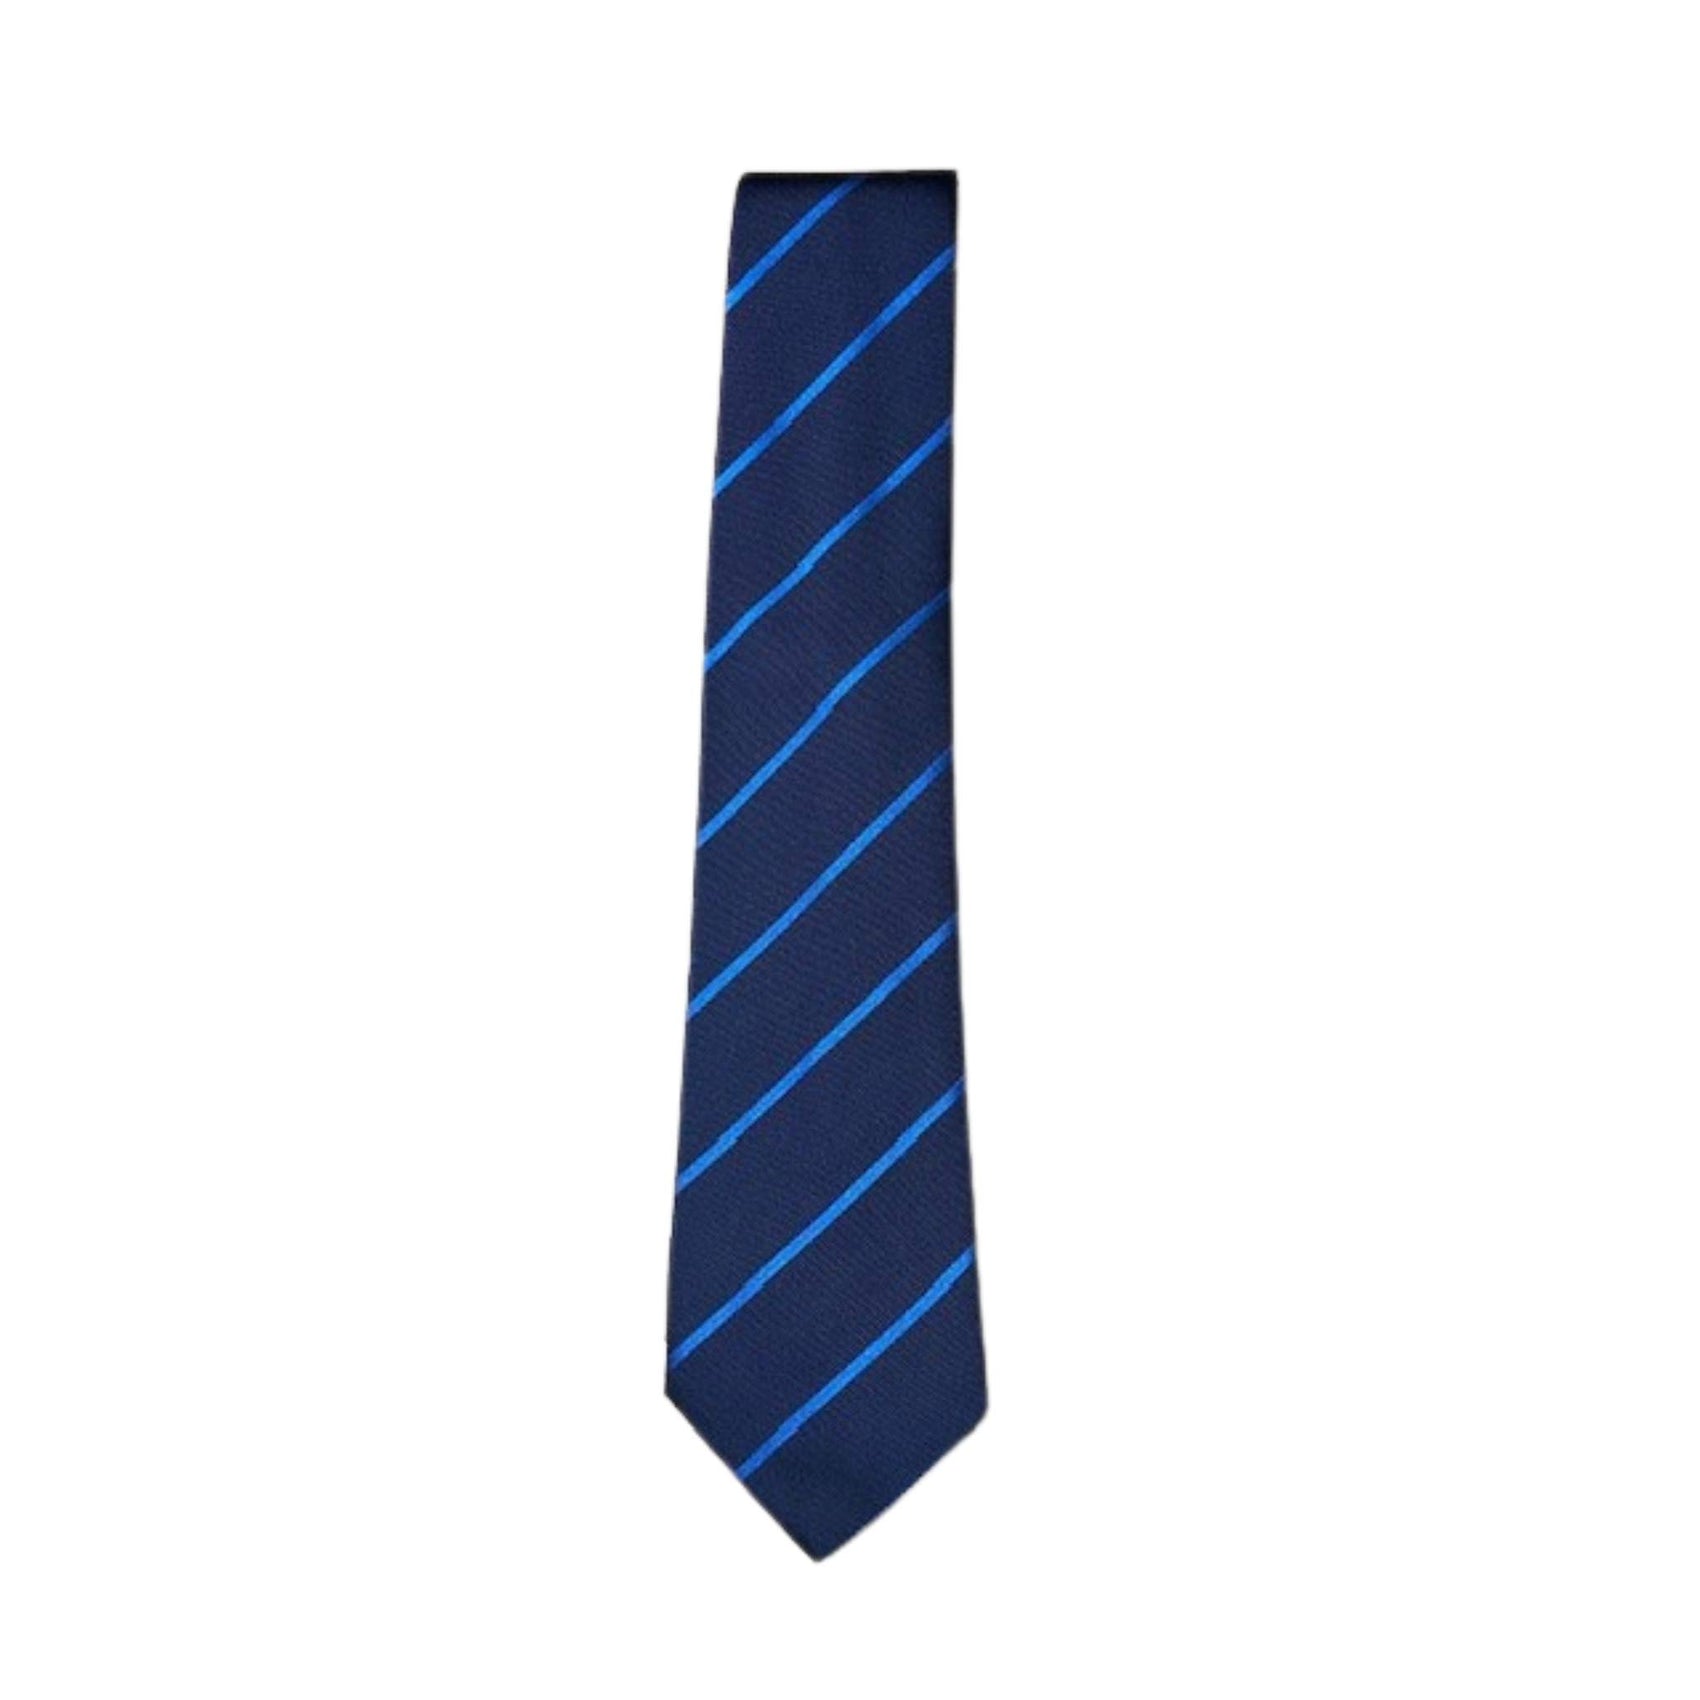 Rhodes Wood  Navy and light Blue stripe tie